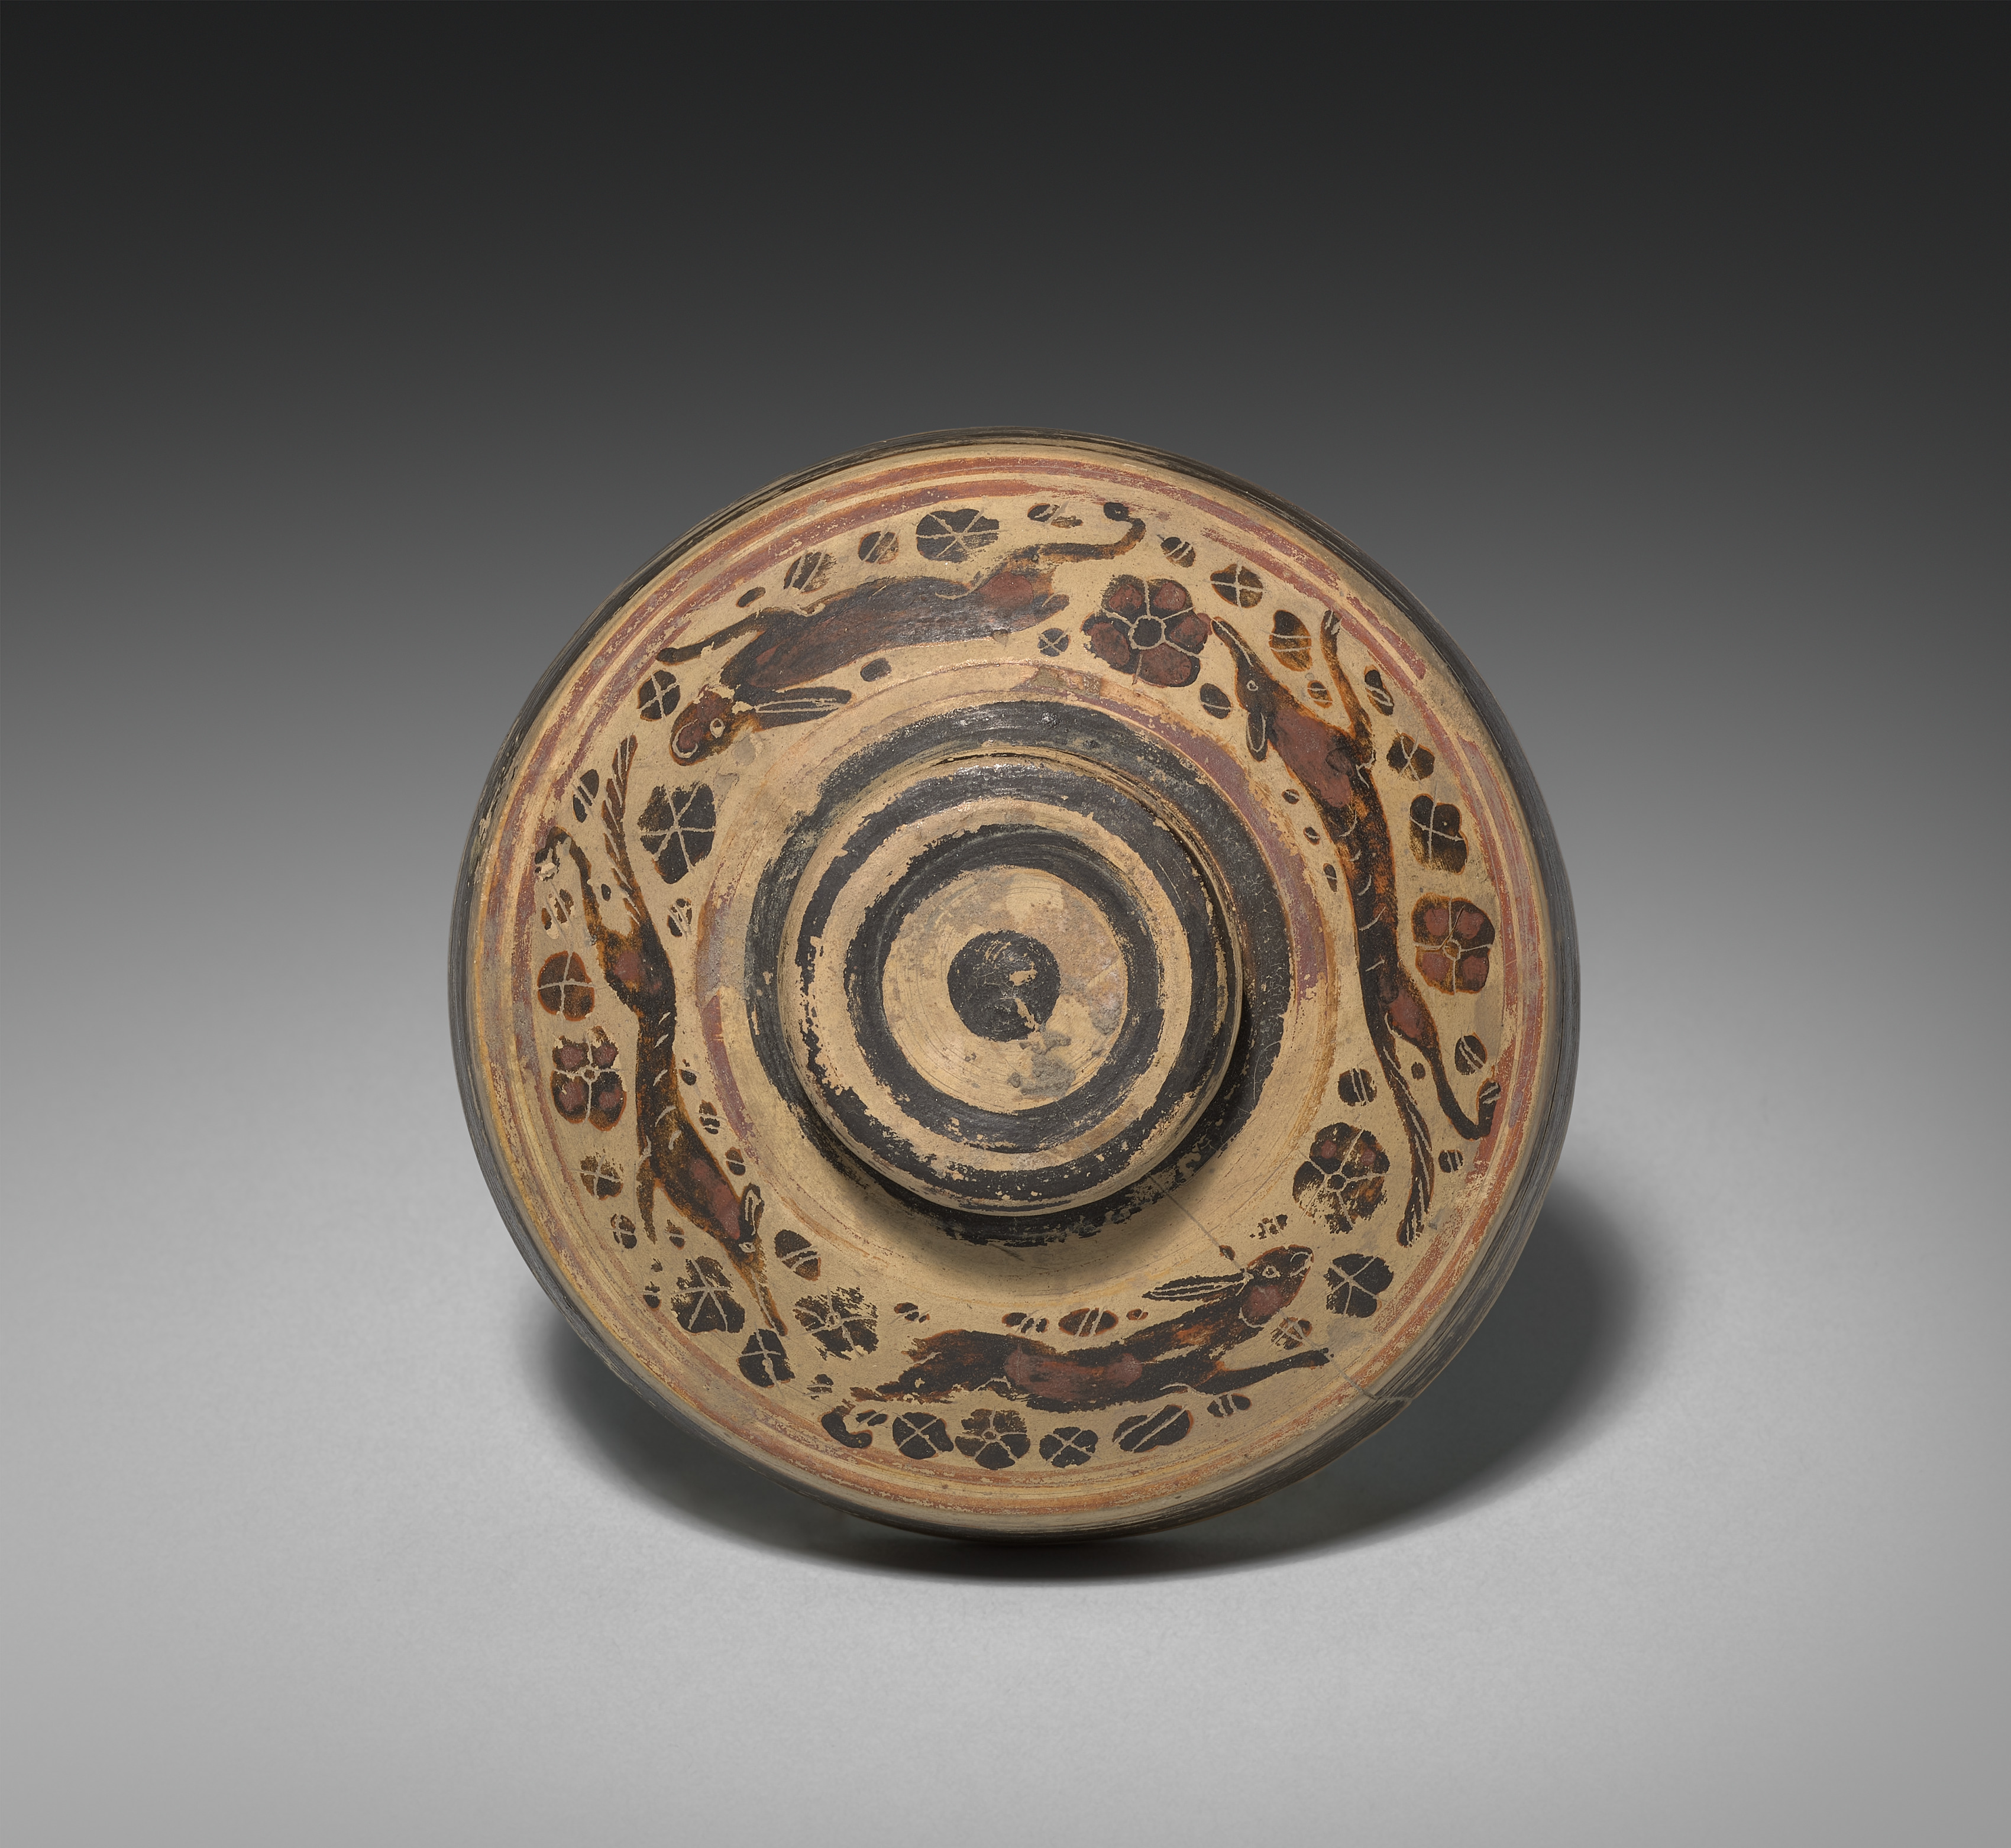 Corinthian Vase (lid)